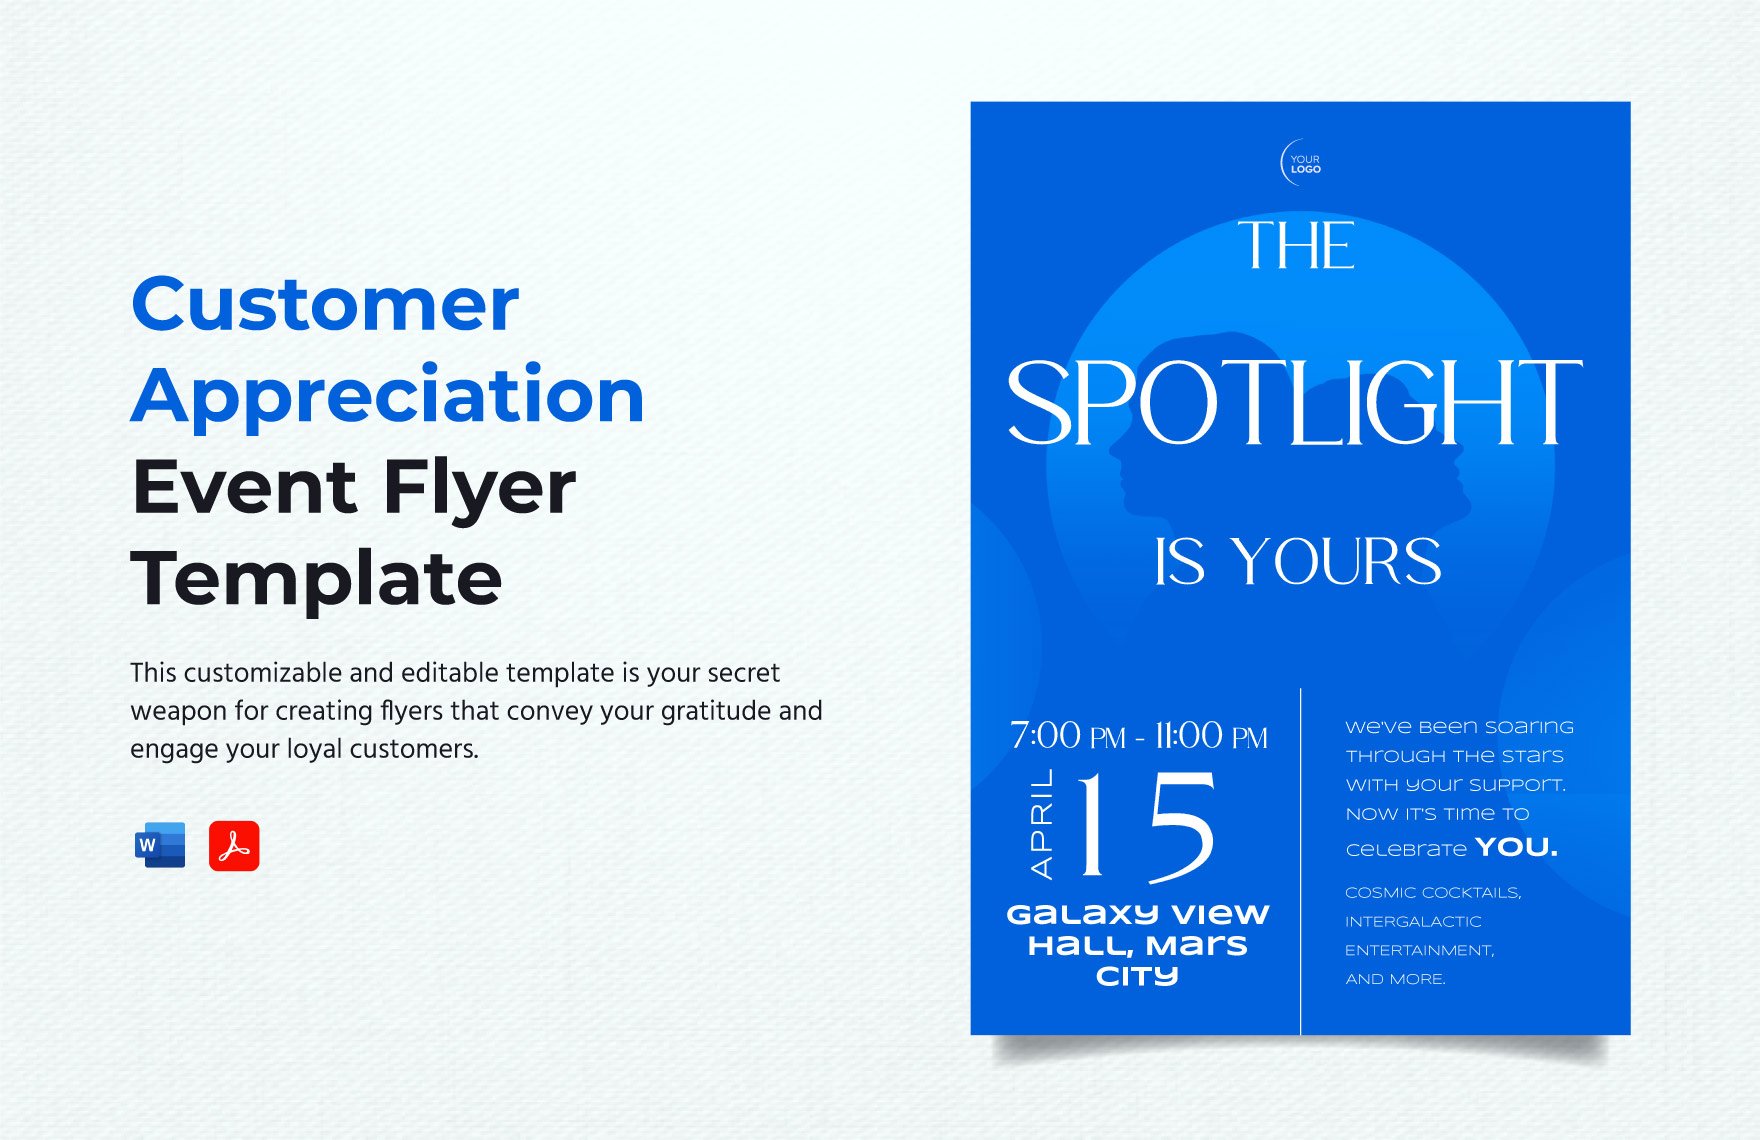 Customer Appreciation Event Flyer Template